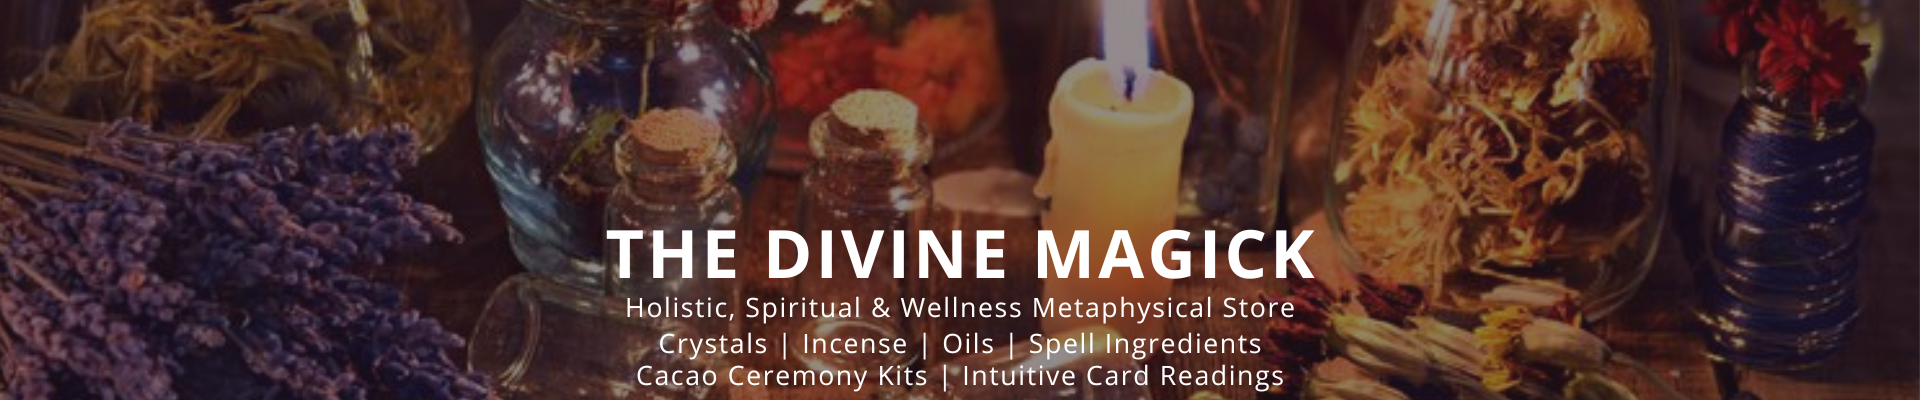 TheDivineMagick | Holistic, Spiritual & Wellness Products | Metaphysical Supplies | Guidance & Self Development Hub